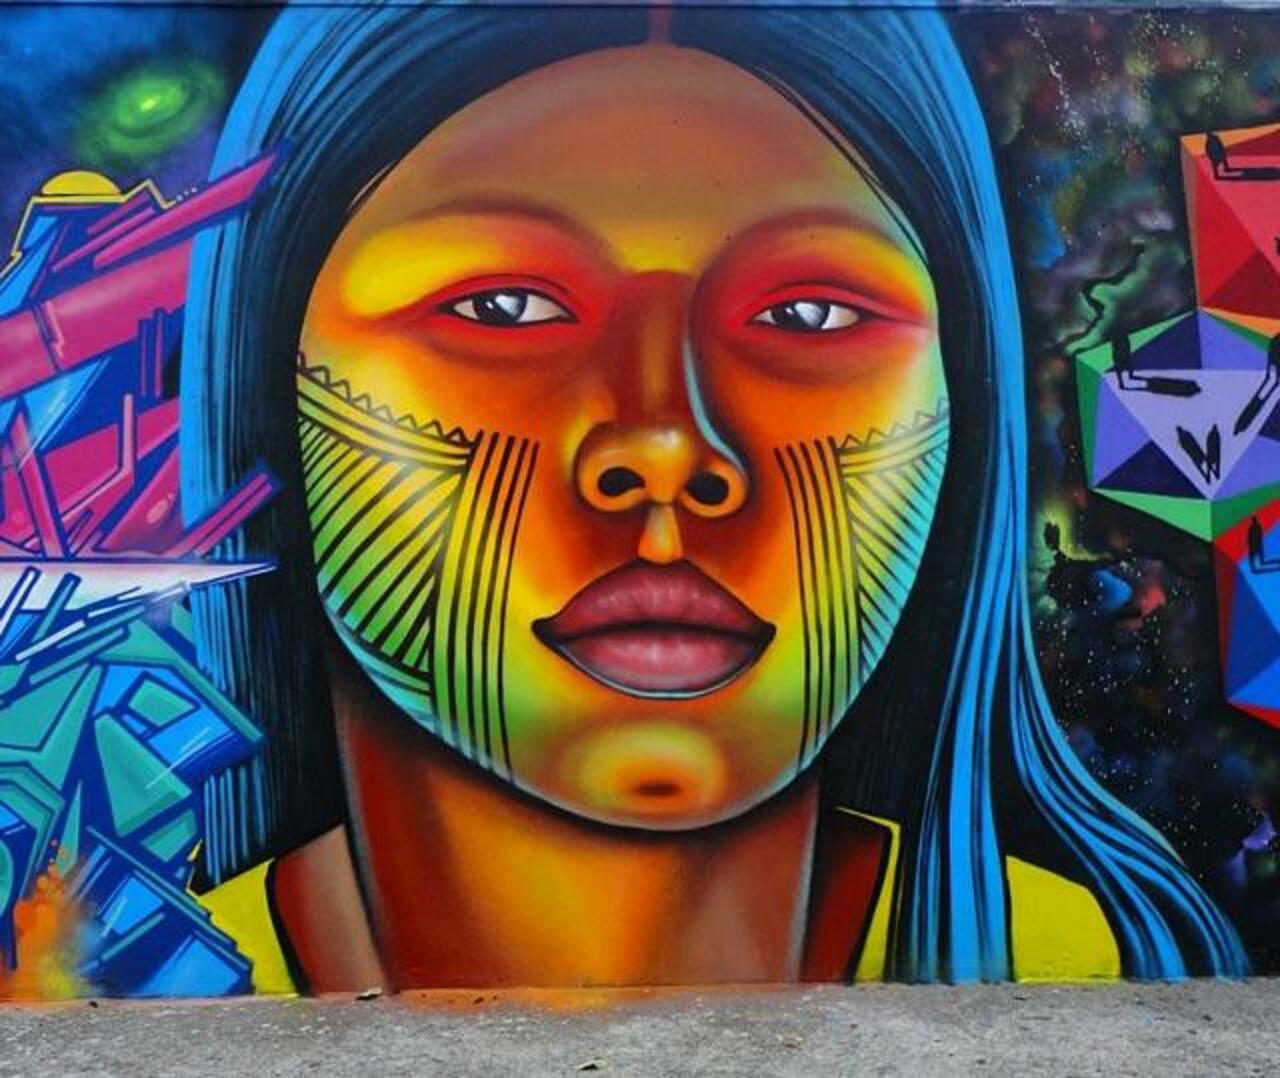 Artist ShalakAttack beautiful & colourful Street Art portrait in Brazil 

#art #graffiti #mural #streetart http://t.co/KEvlA7BMMk